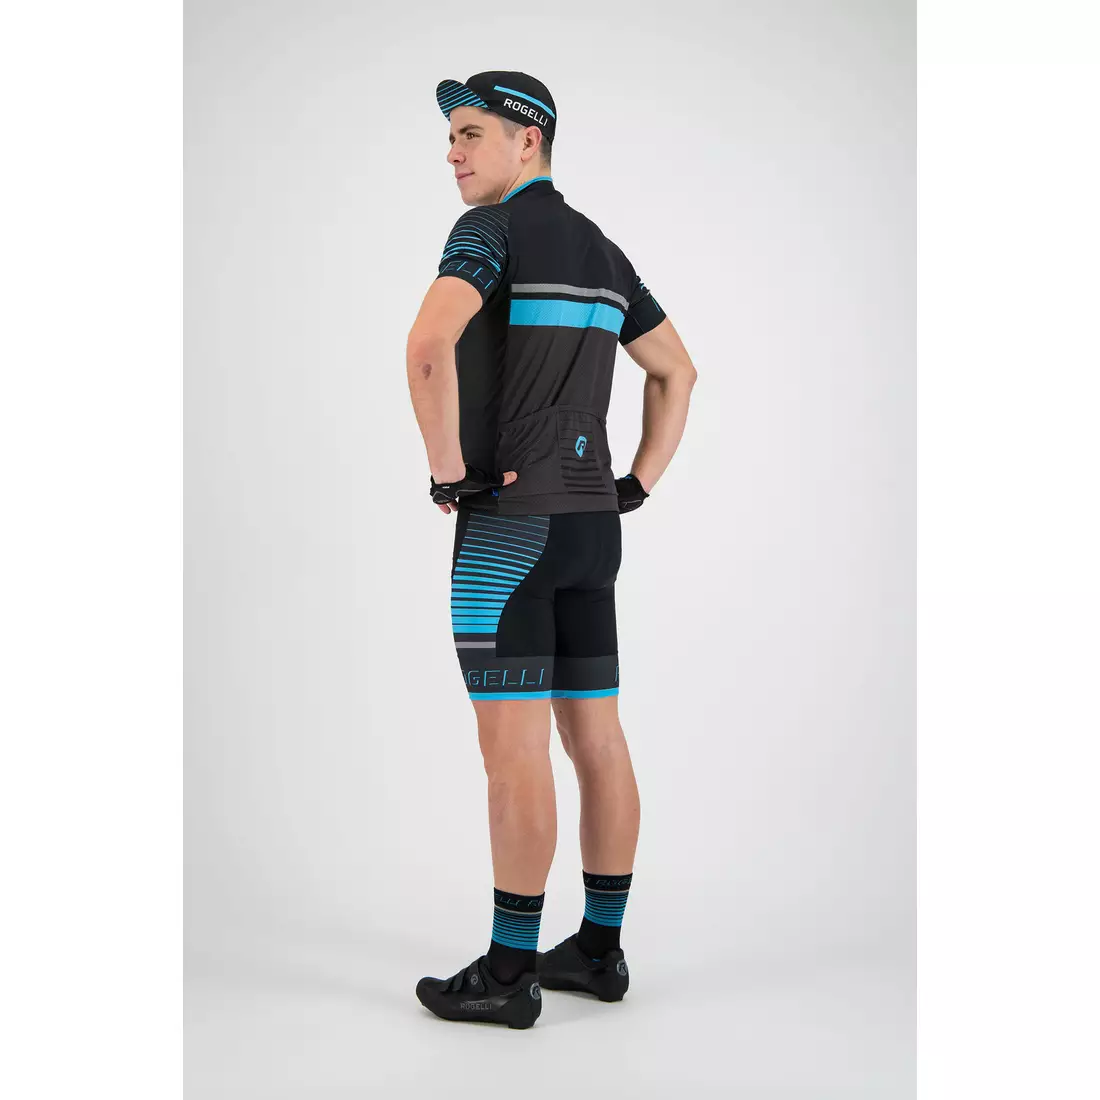 Rogelli HERO 002.237 Men Bike Bib shorts Black/Grey/Blue